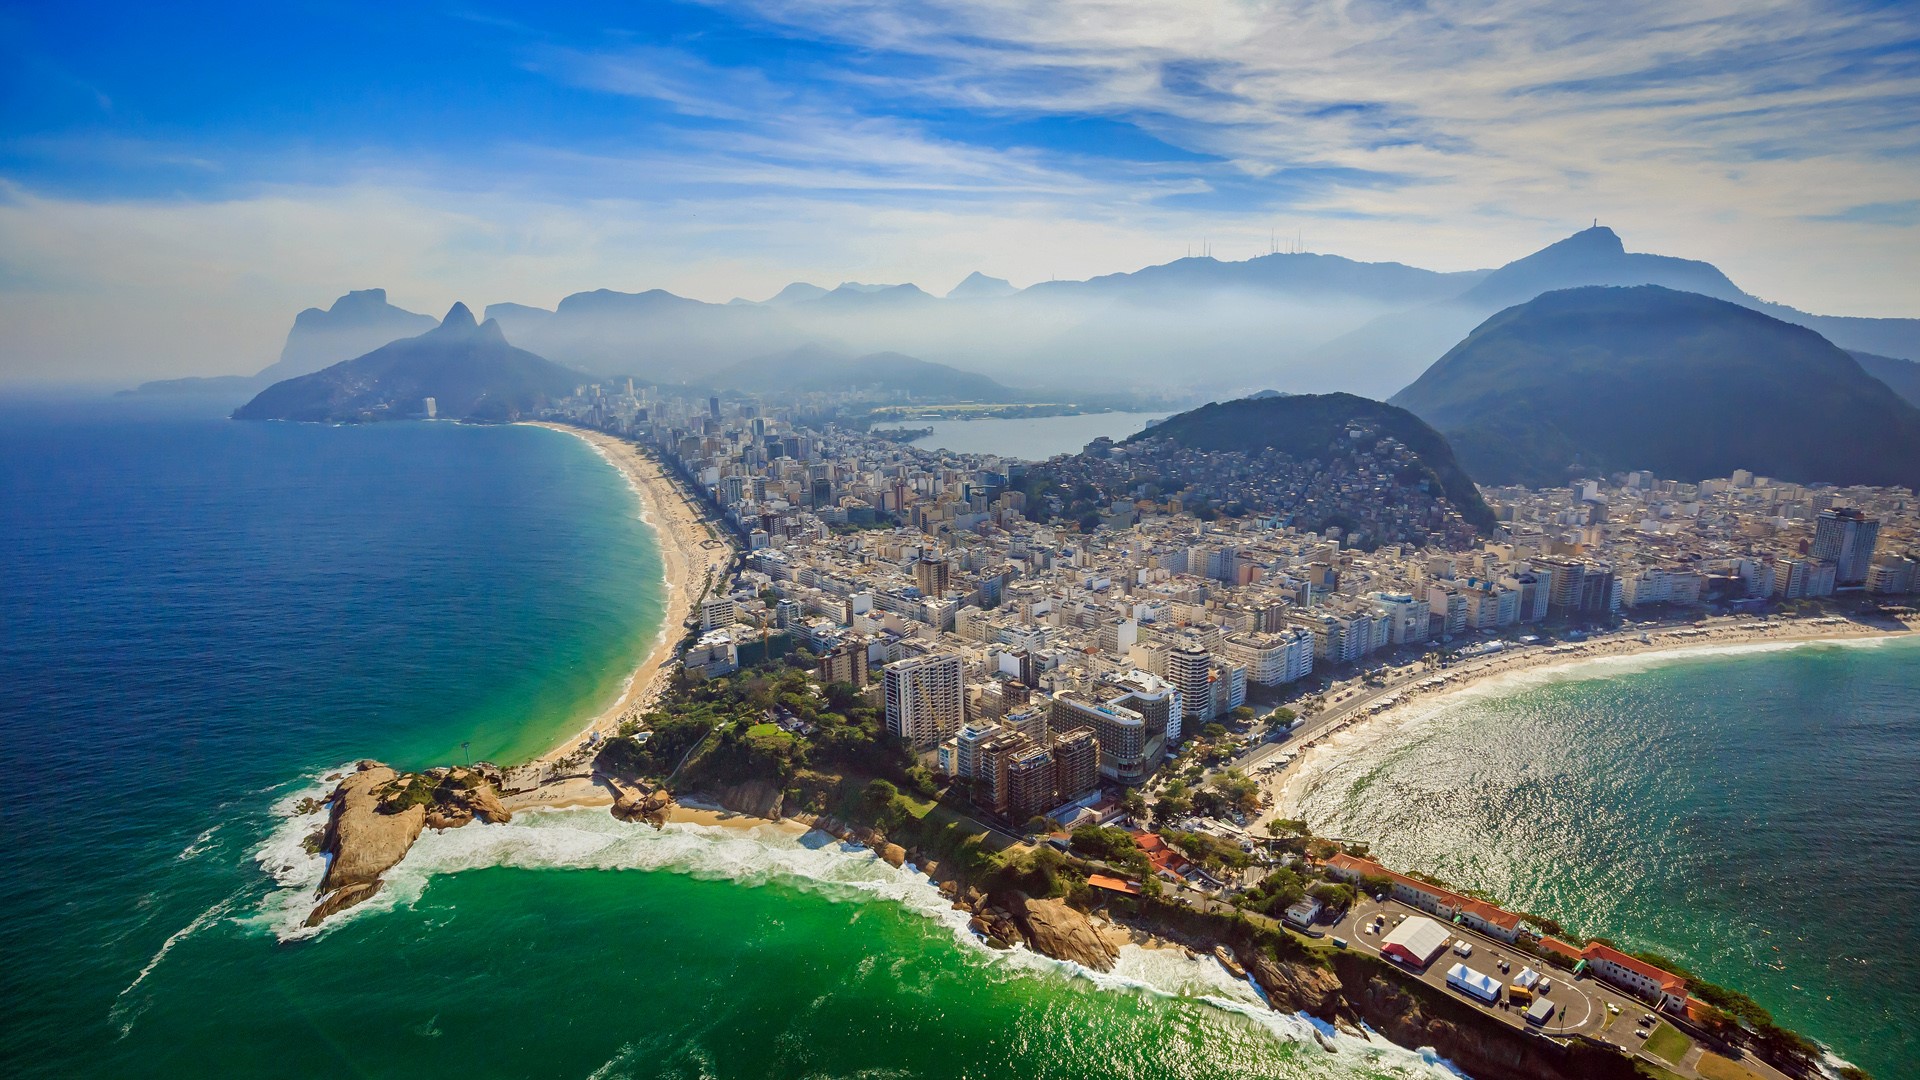 General 1920x1080 Brazil Rio de Janeiro Copacabana beach mountains sky clouds atlantic ocean mist landscape cityscape Ipanema